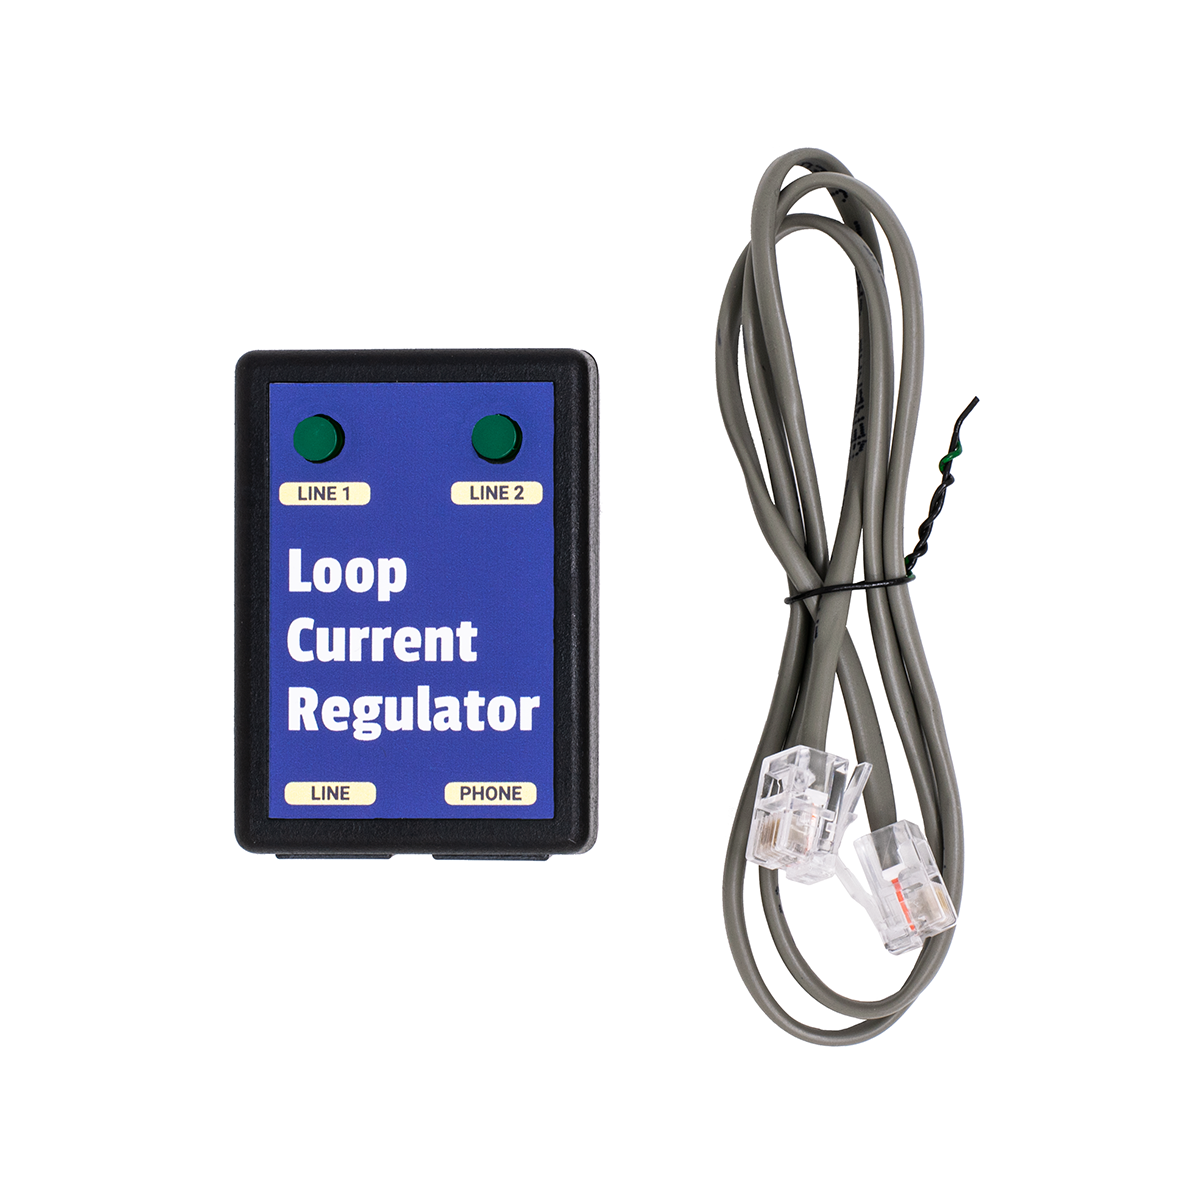 Loop Current Regulator 2-Line w/Cord